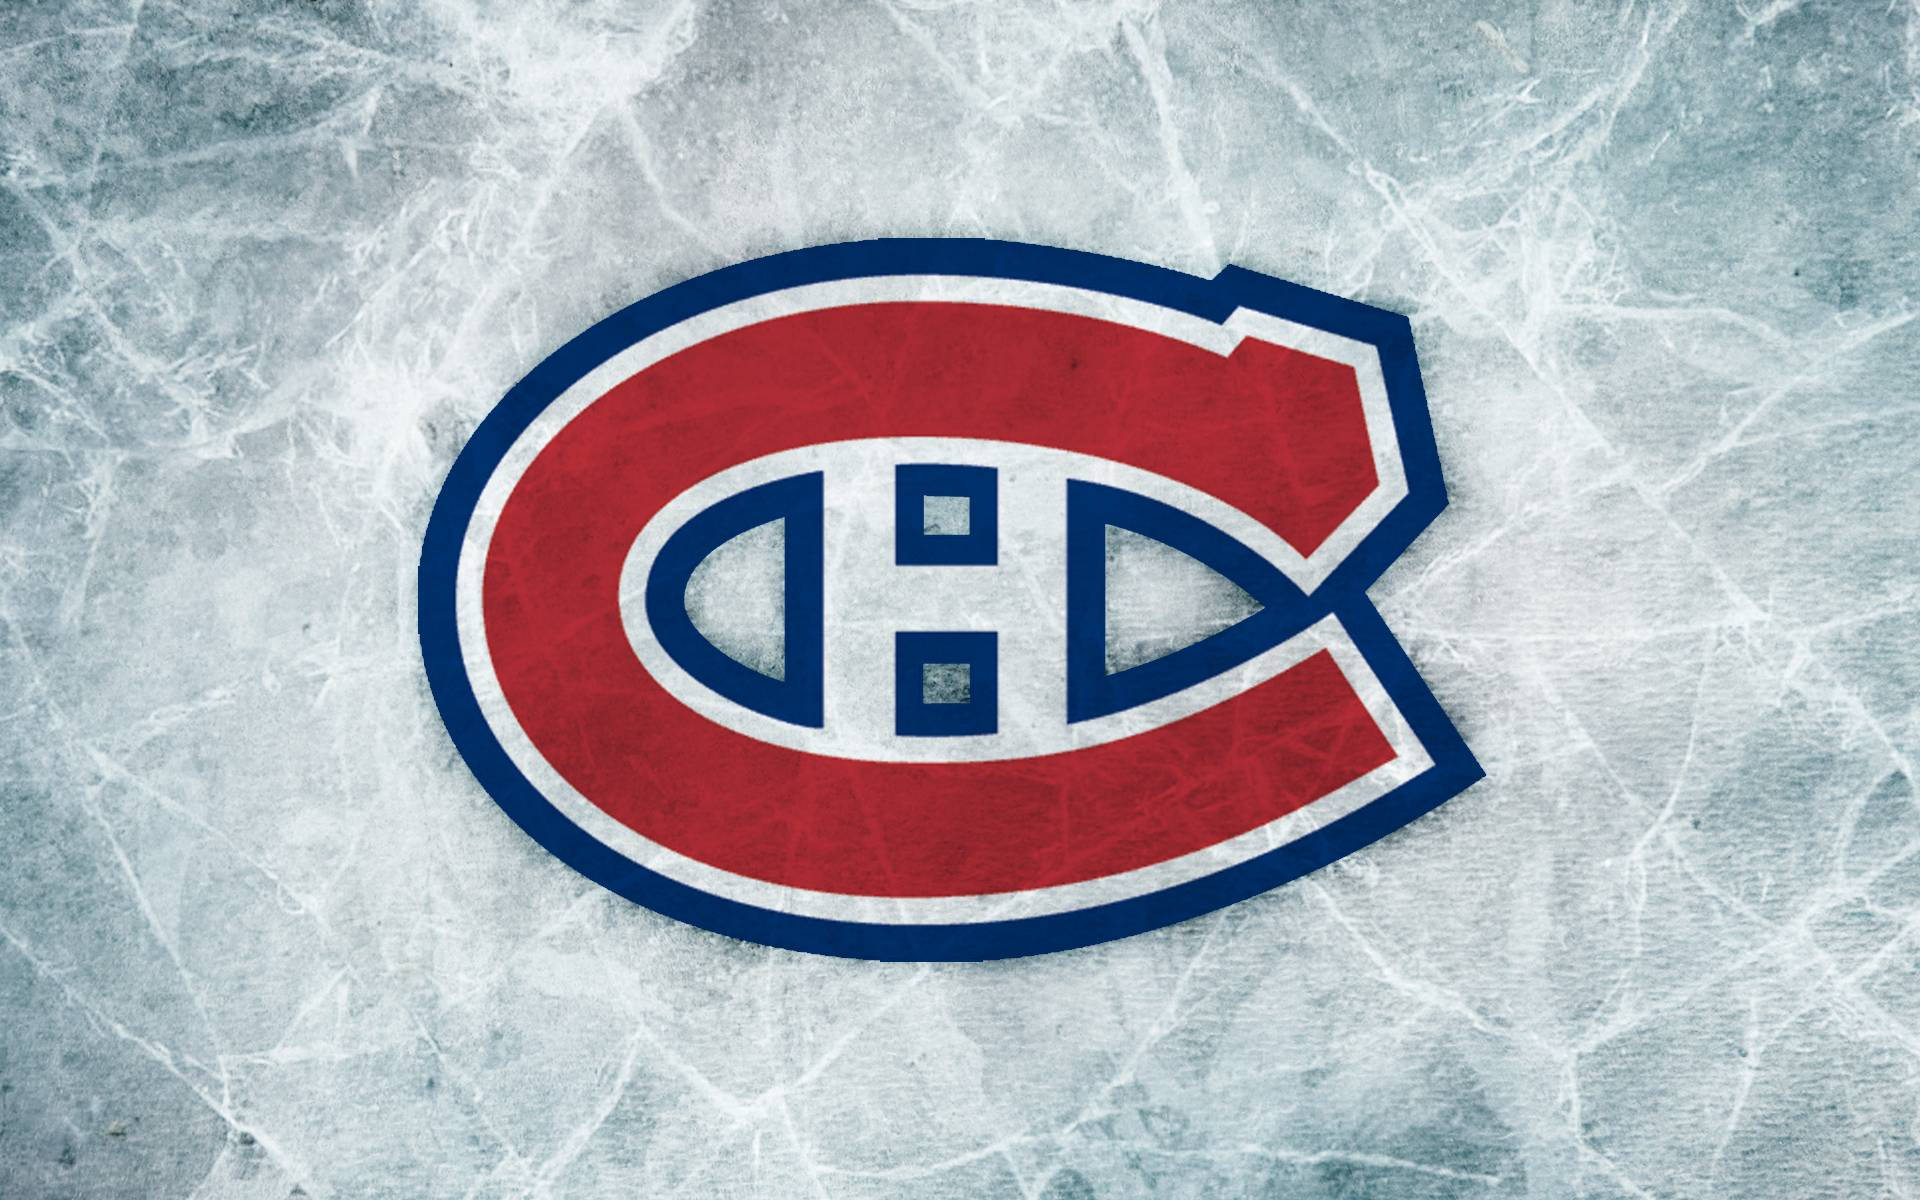 Montreal Canadiens Ice Hockey Team Wallpaper